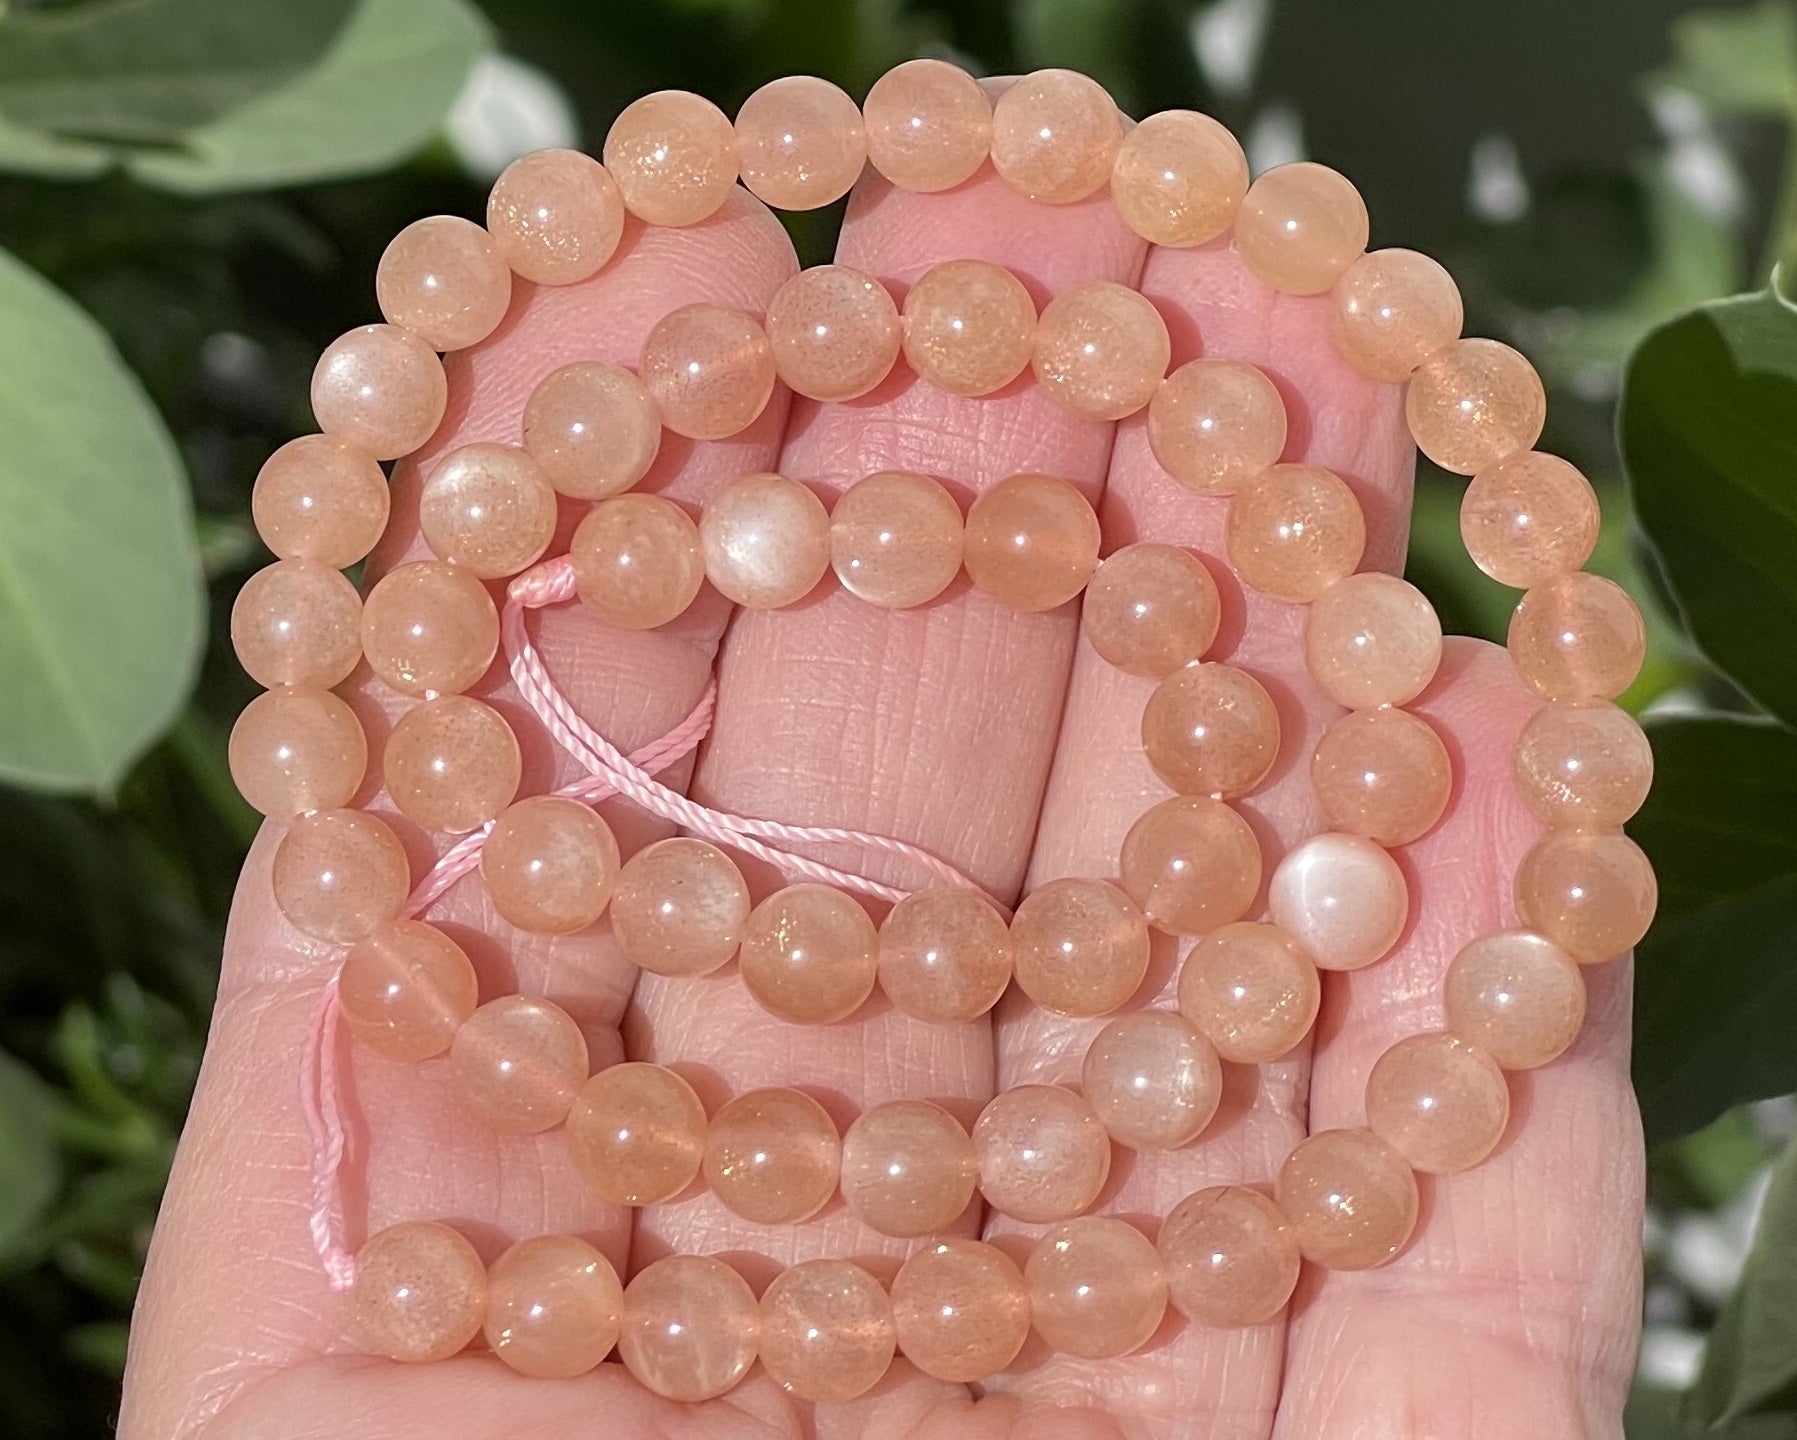 Orange Sunstone 6mm round natural gemstone beads 15.5" strand